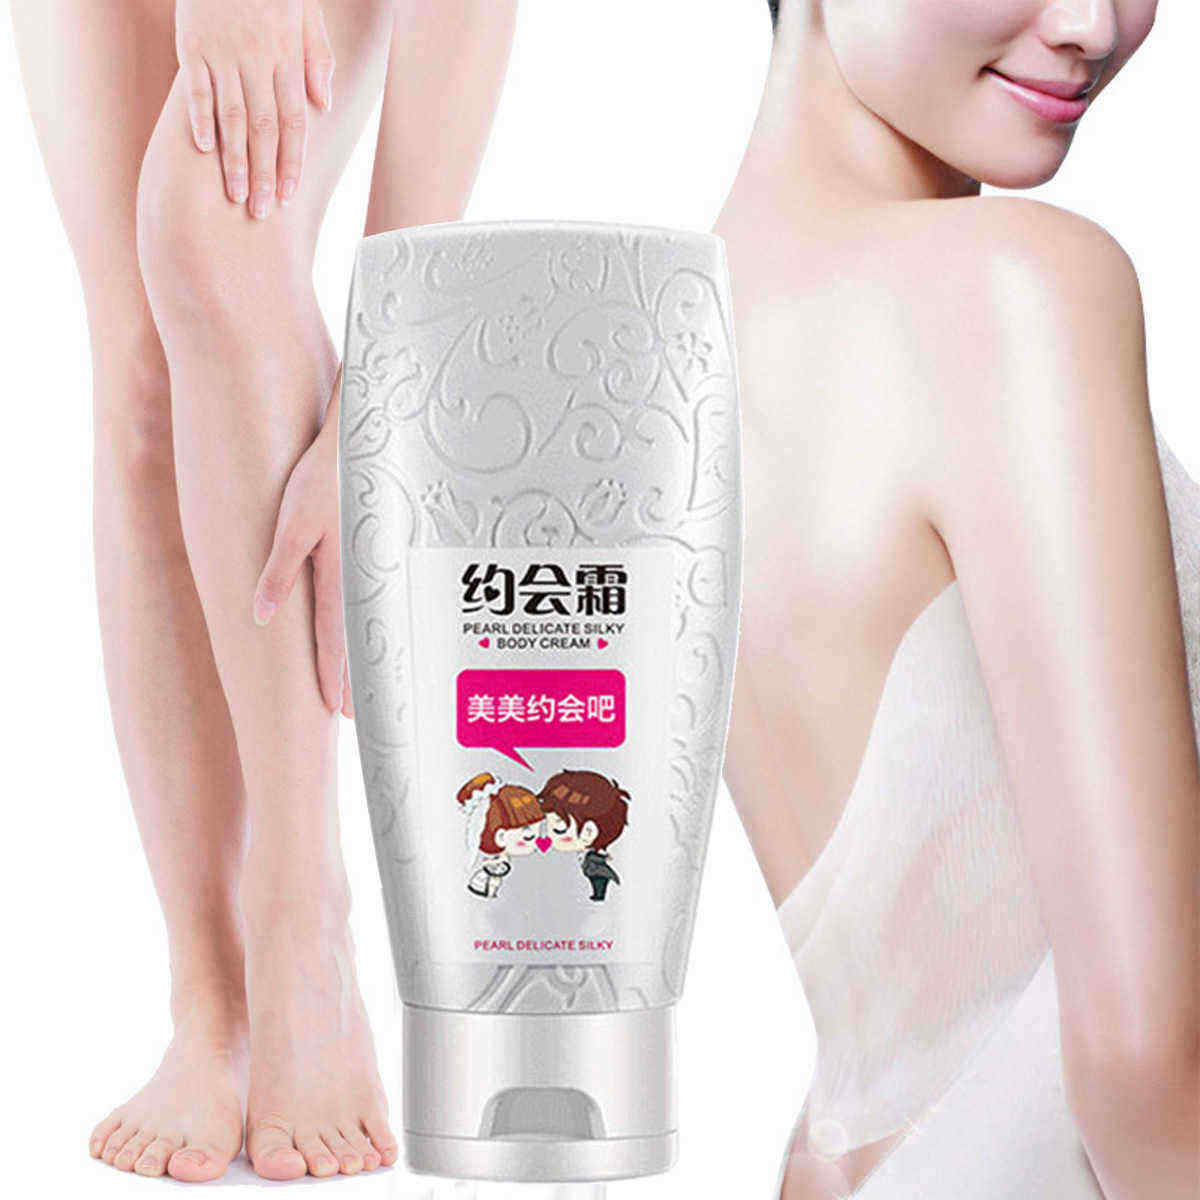 100g-Powerful-Skin-Whitening-Bleaching-Cream-For-Dark-Skin-Whole-Body-Lotion-1261276